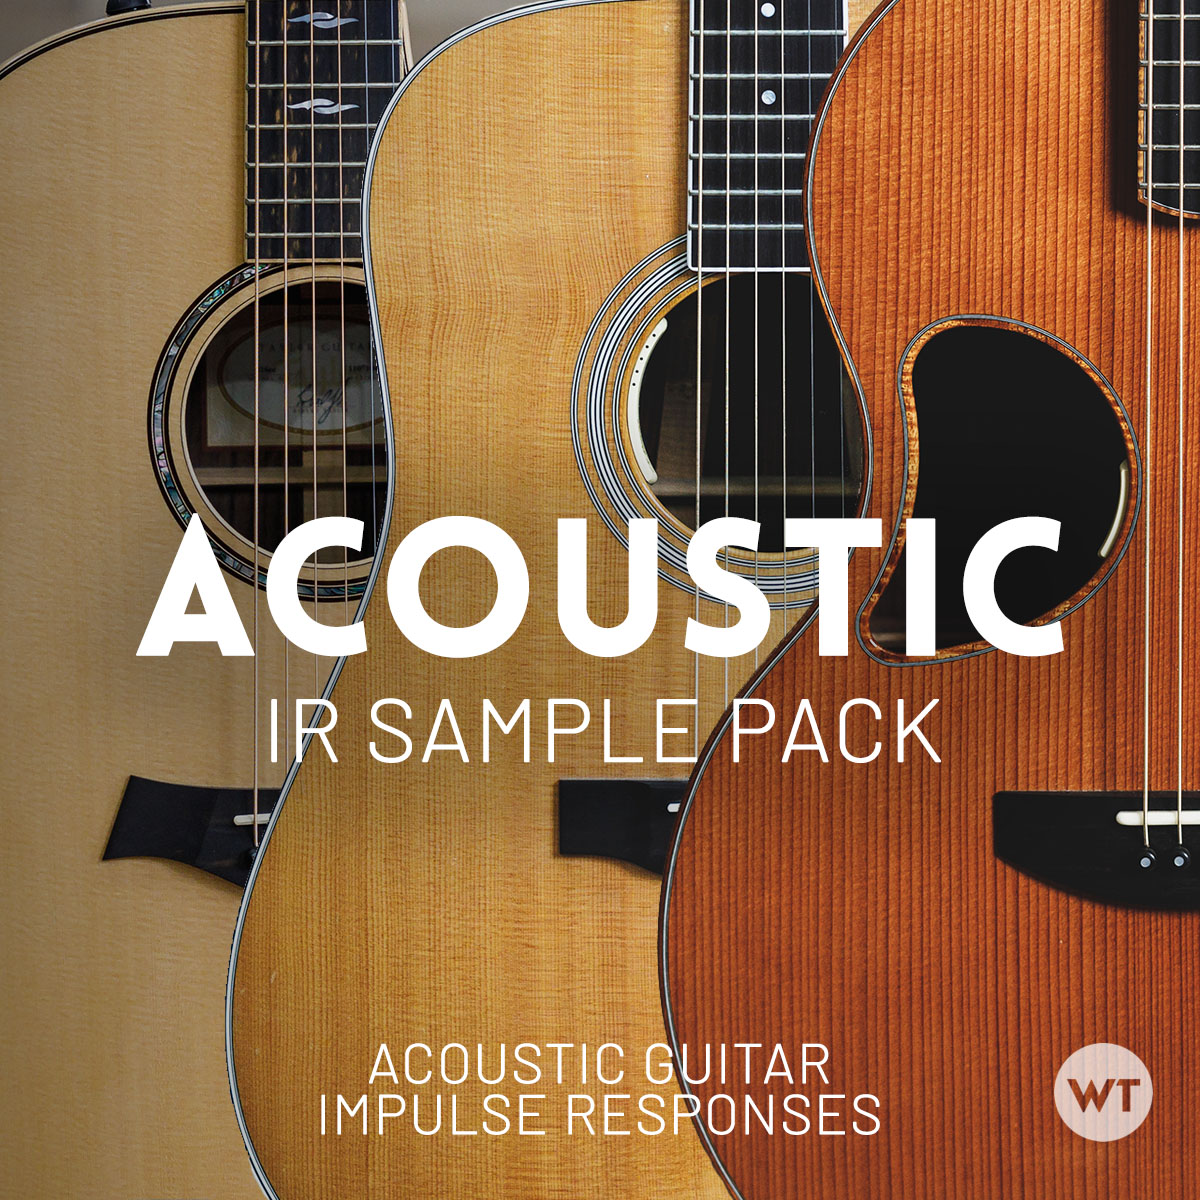 Acoustic sample pack